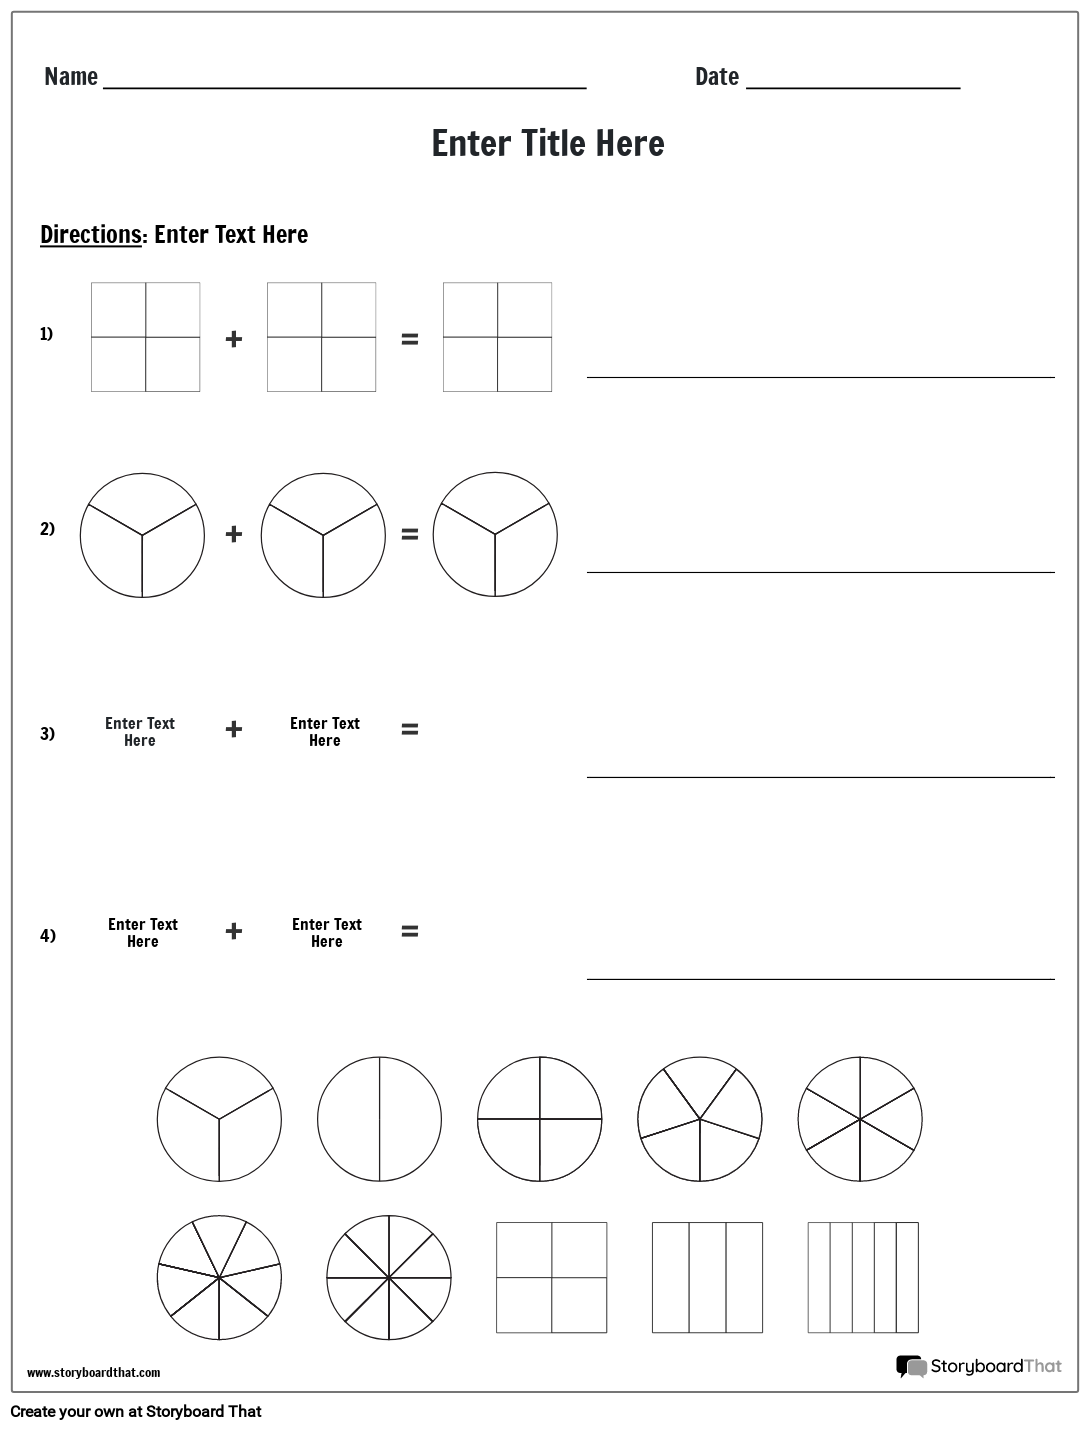 adding-fractions-template-siu-etin-s-linijos-iki-worksheet-templates